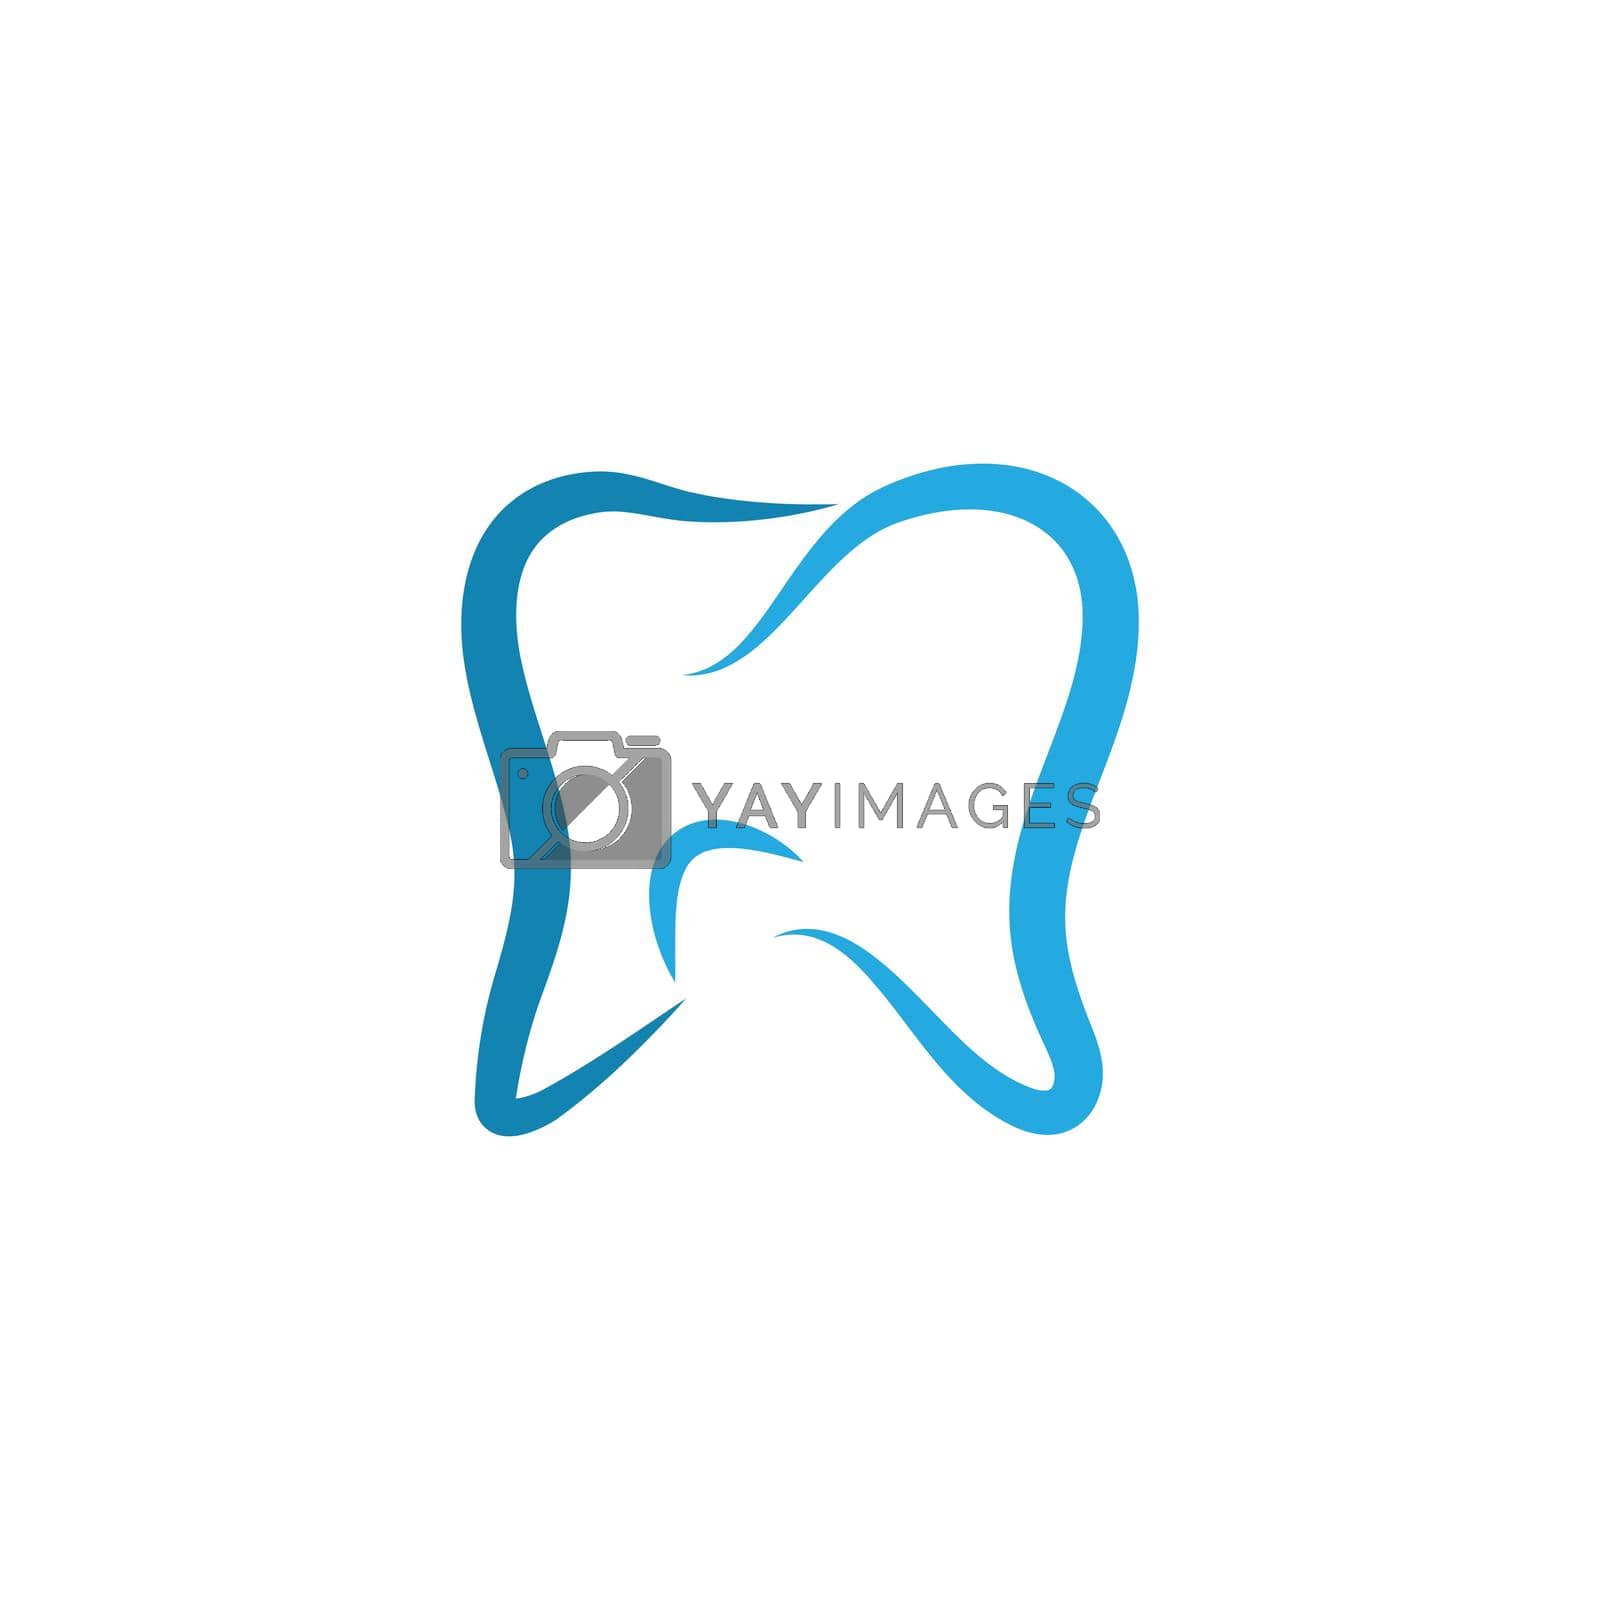  Dental logo Template vector illustration icon design